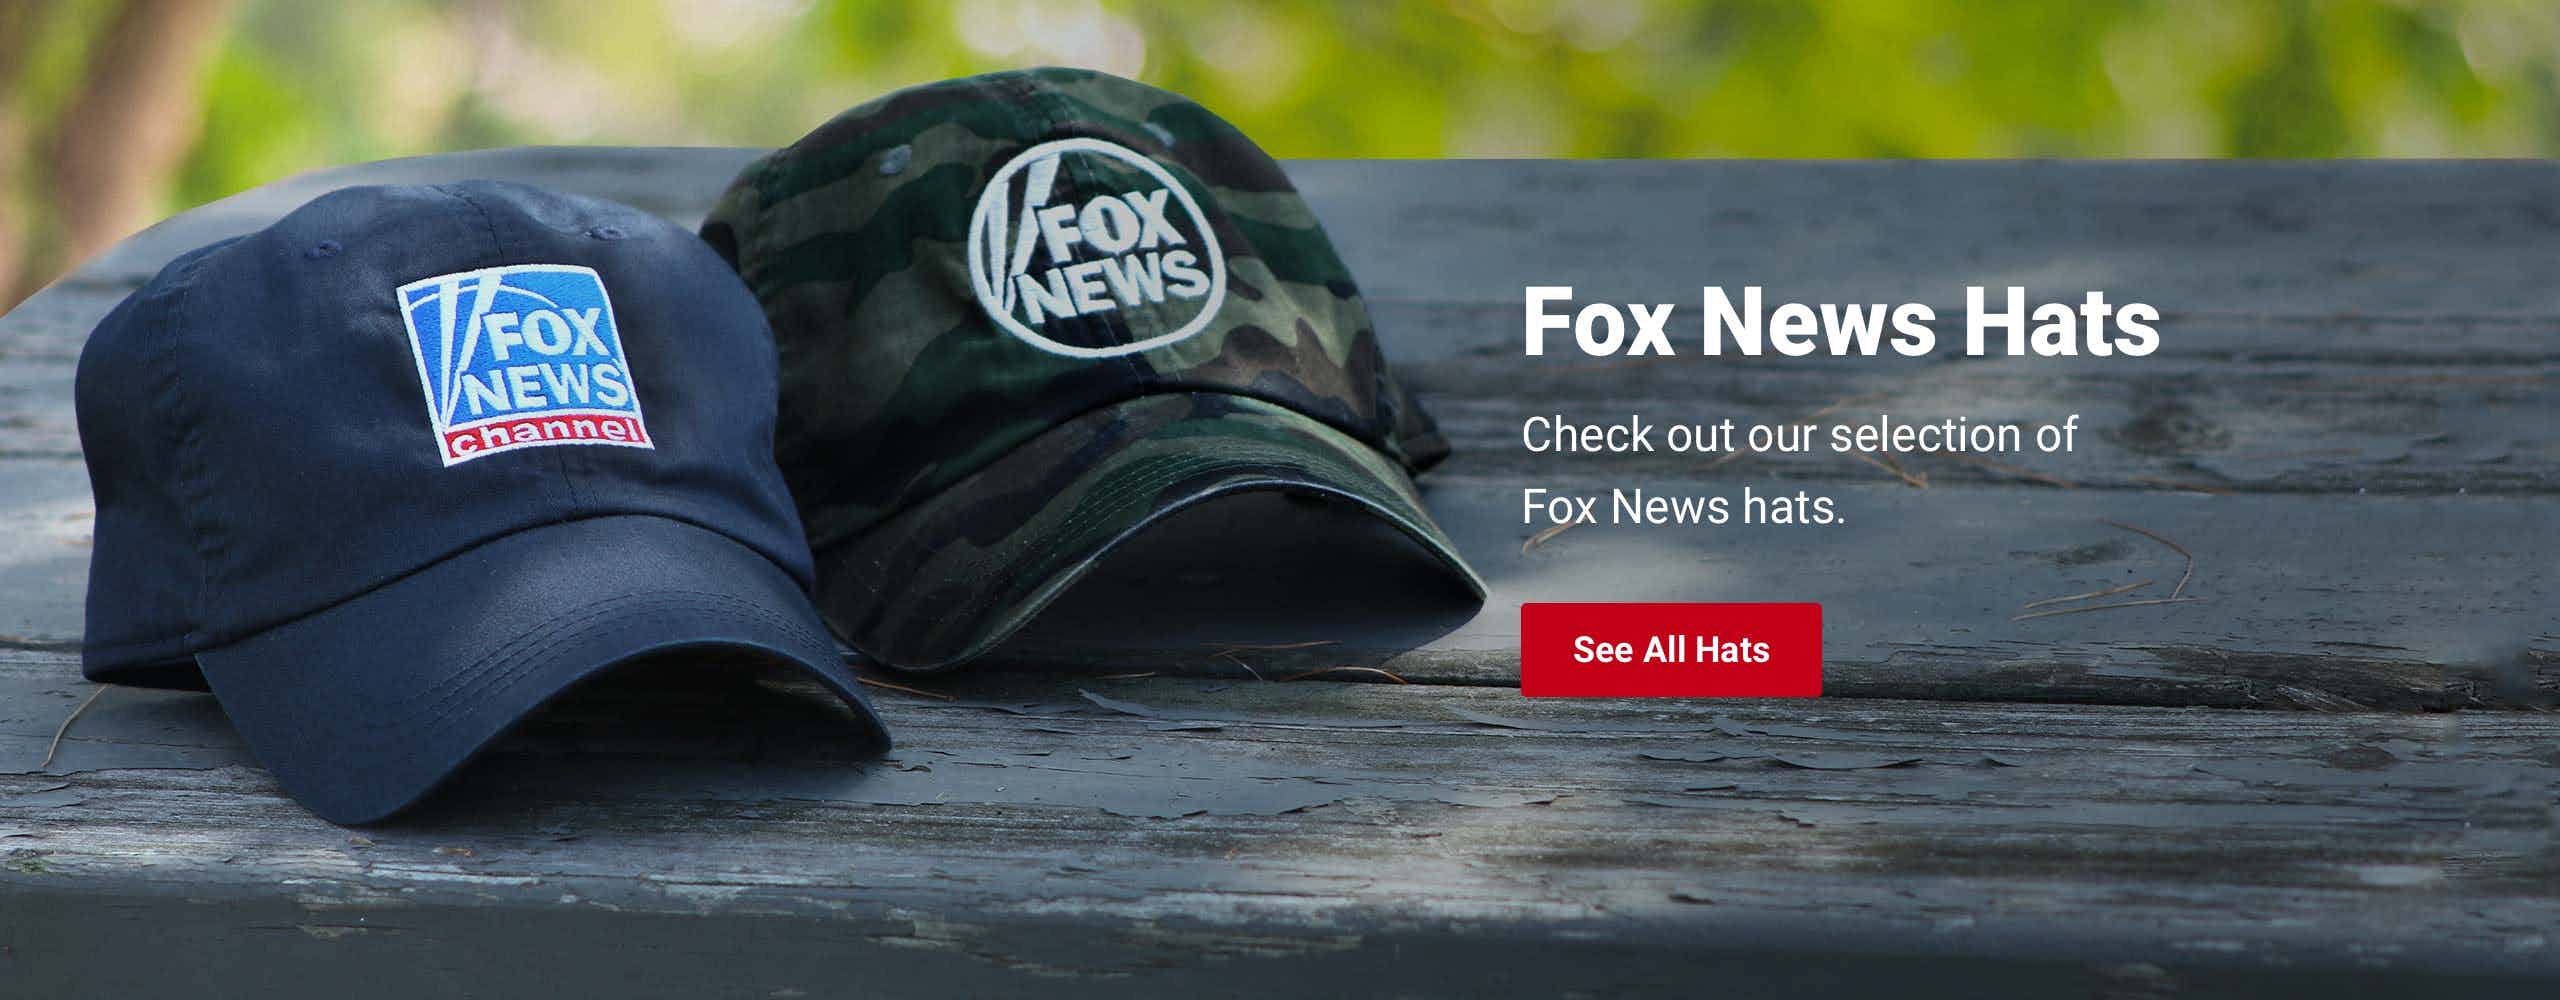 Fox News Hats